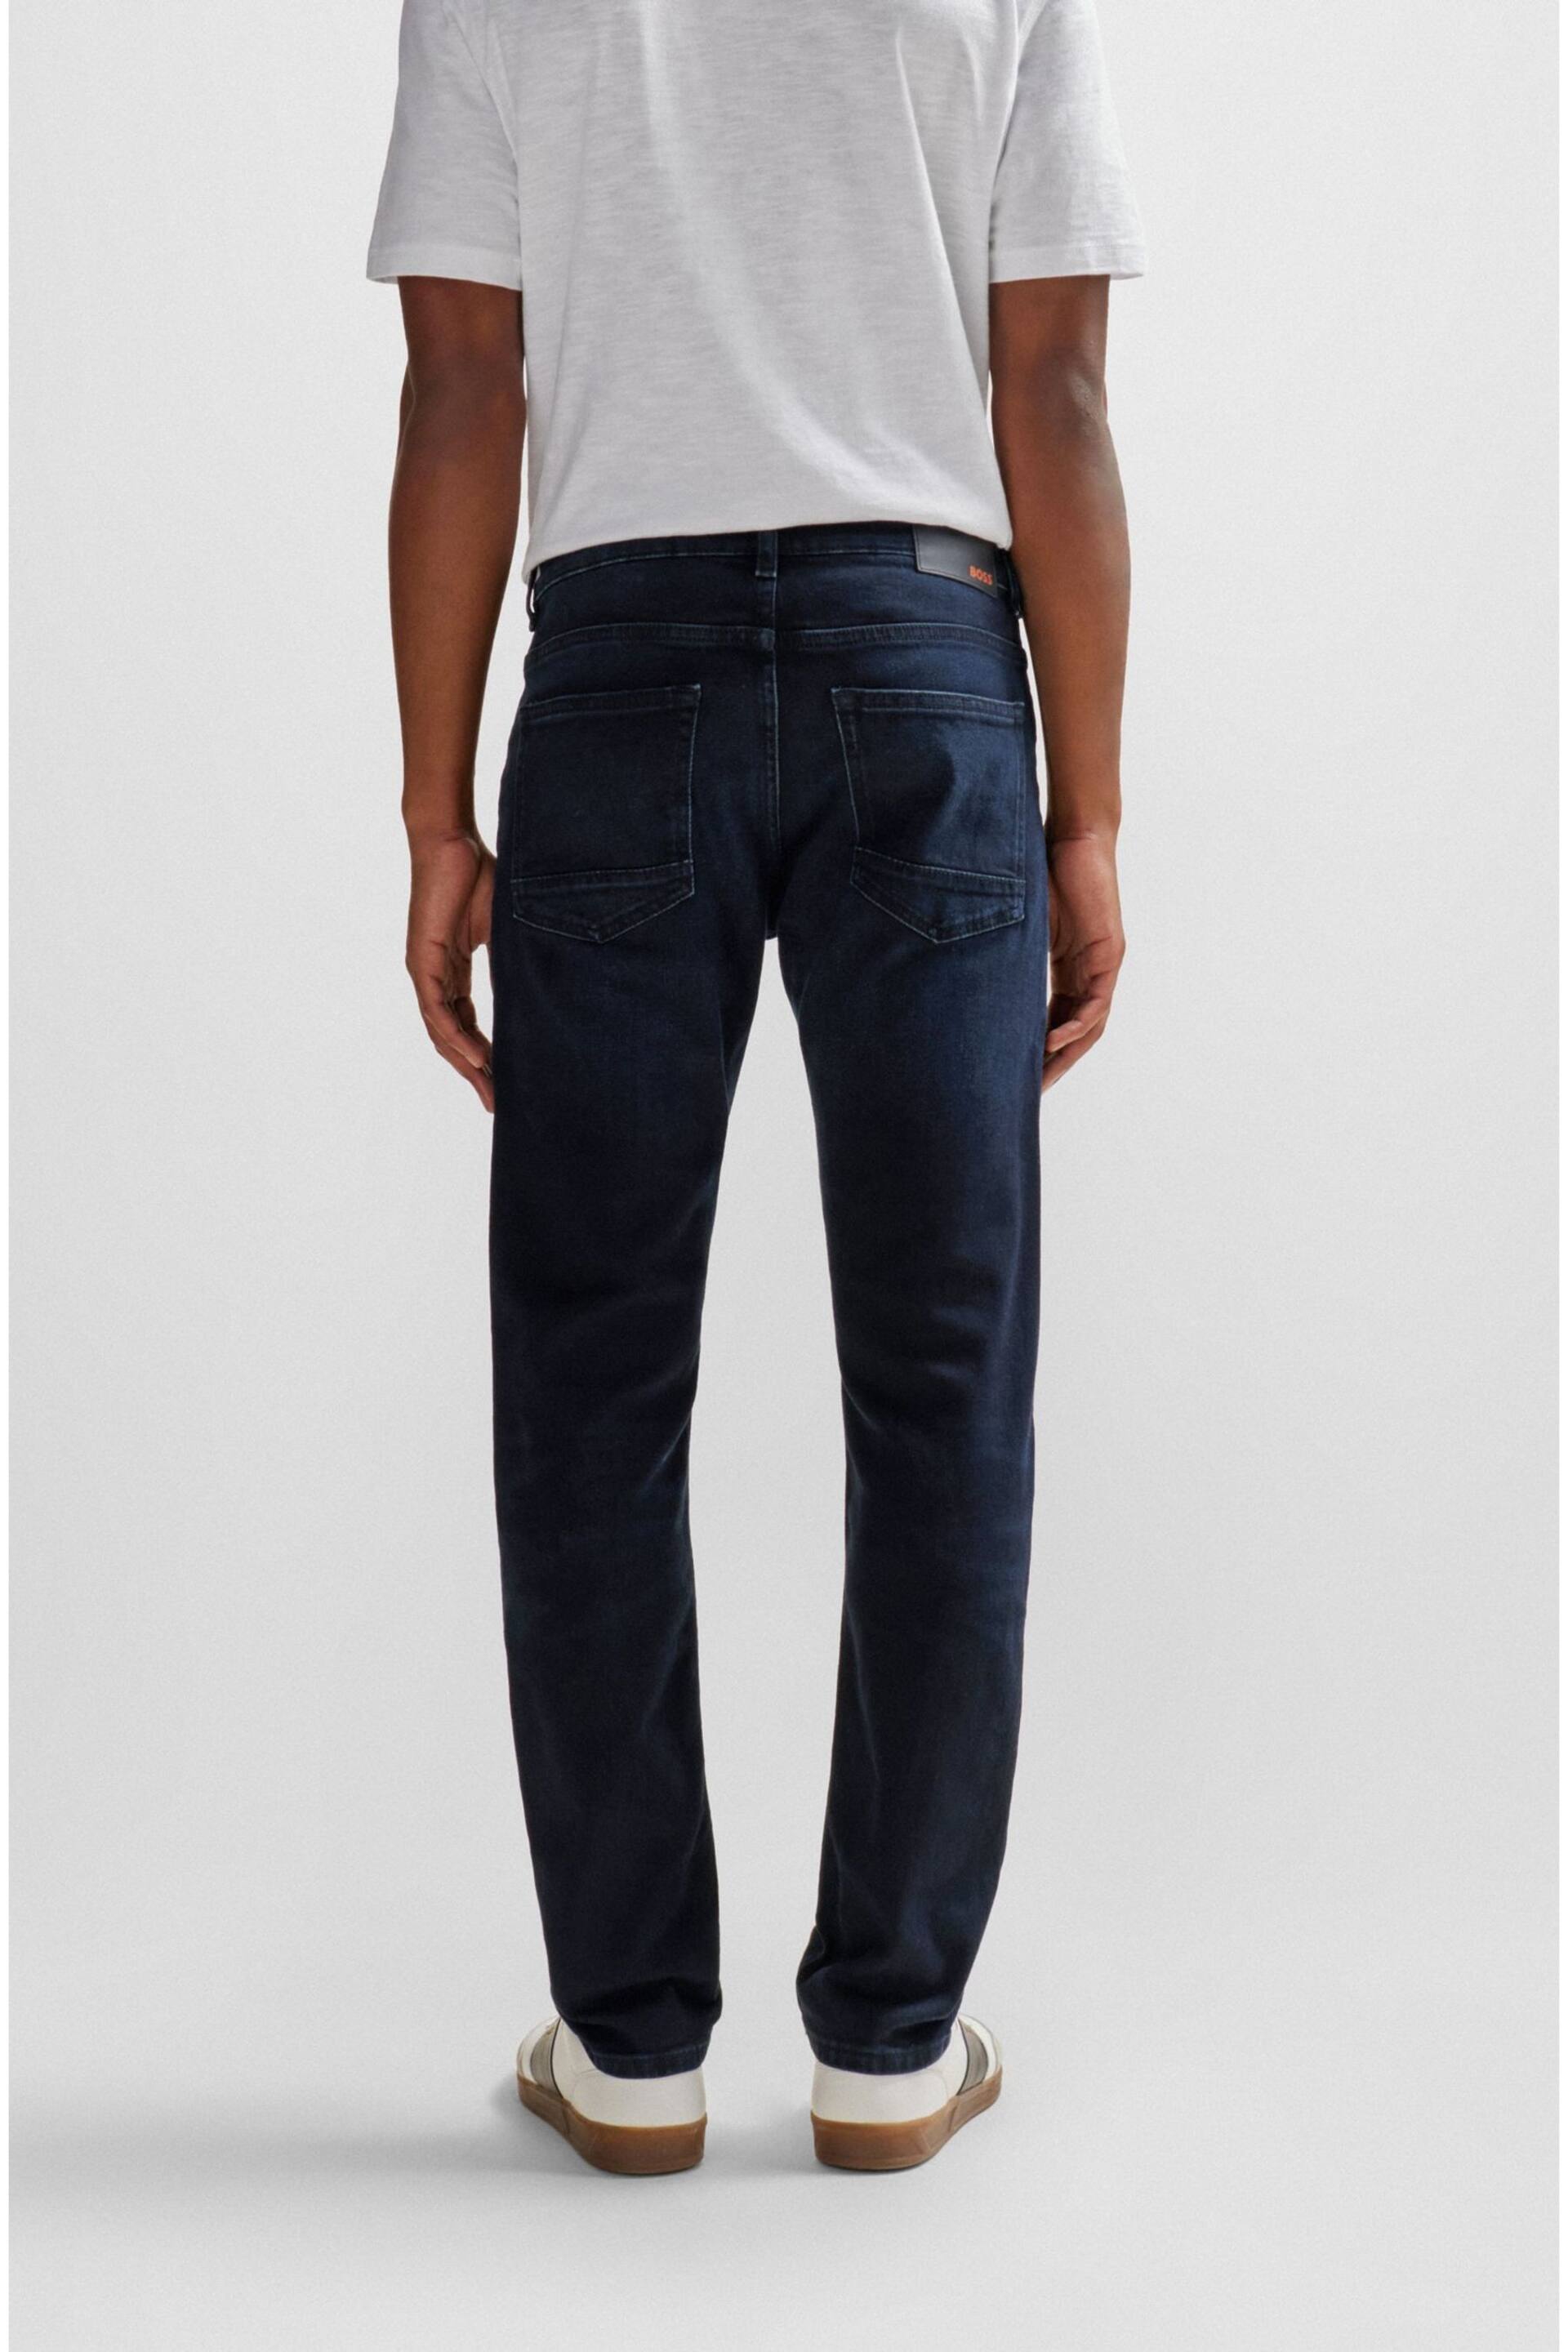 BOSS Navy Blue Slim Fit Comfort Stretch Denim Jeans - Image 2 of 5